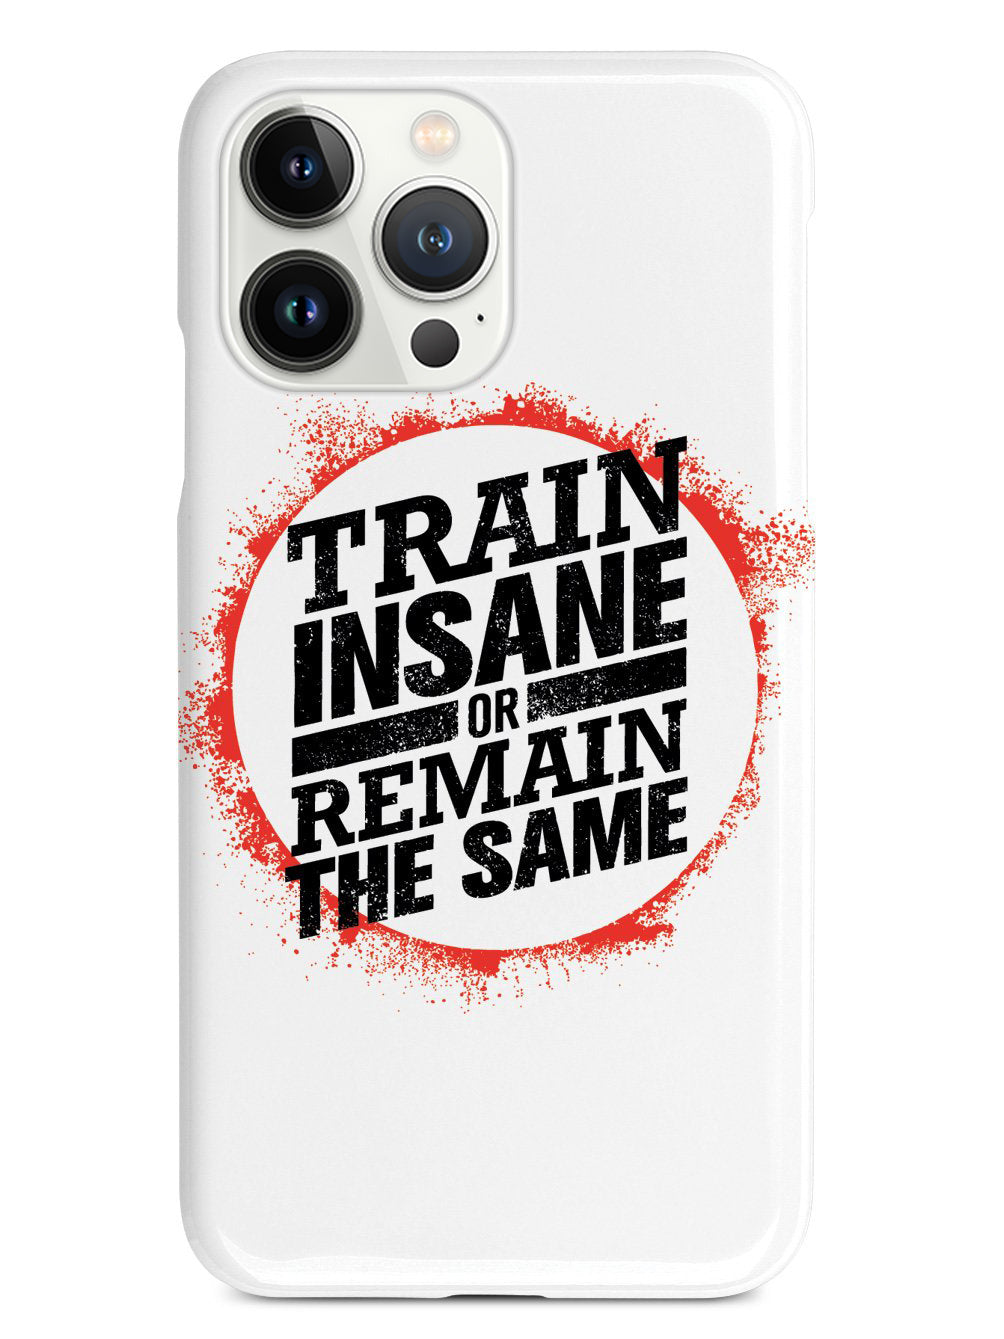 Train Insane or Remain the Same - White Case